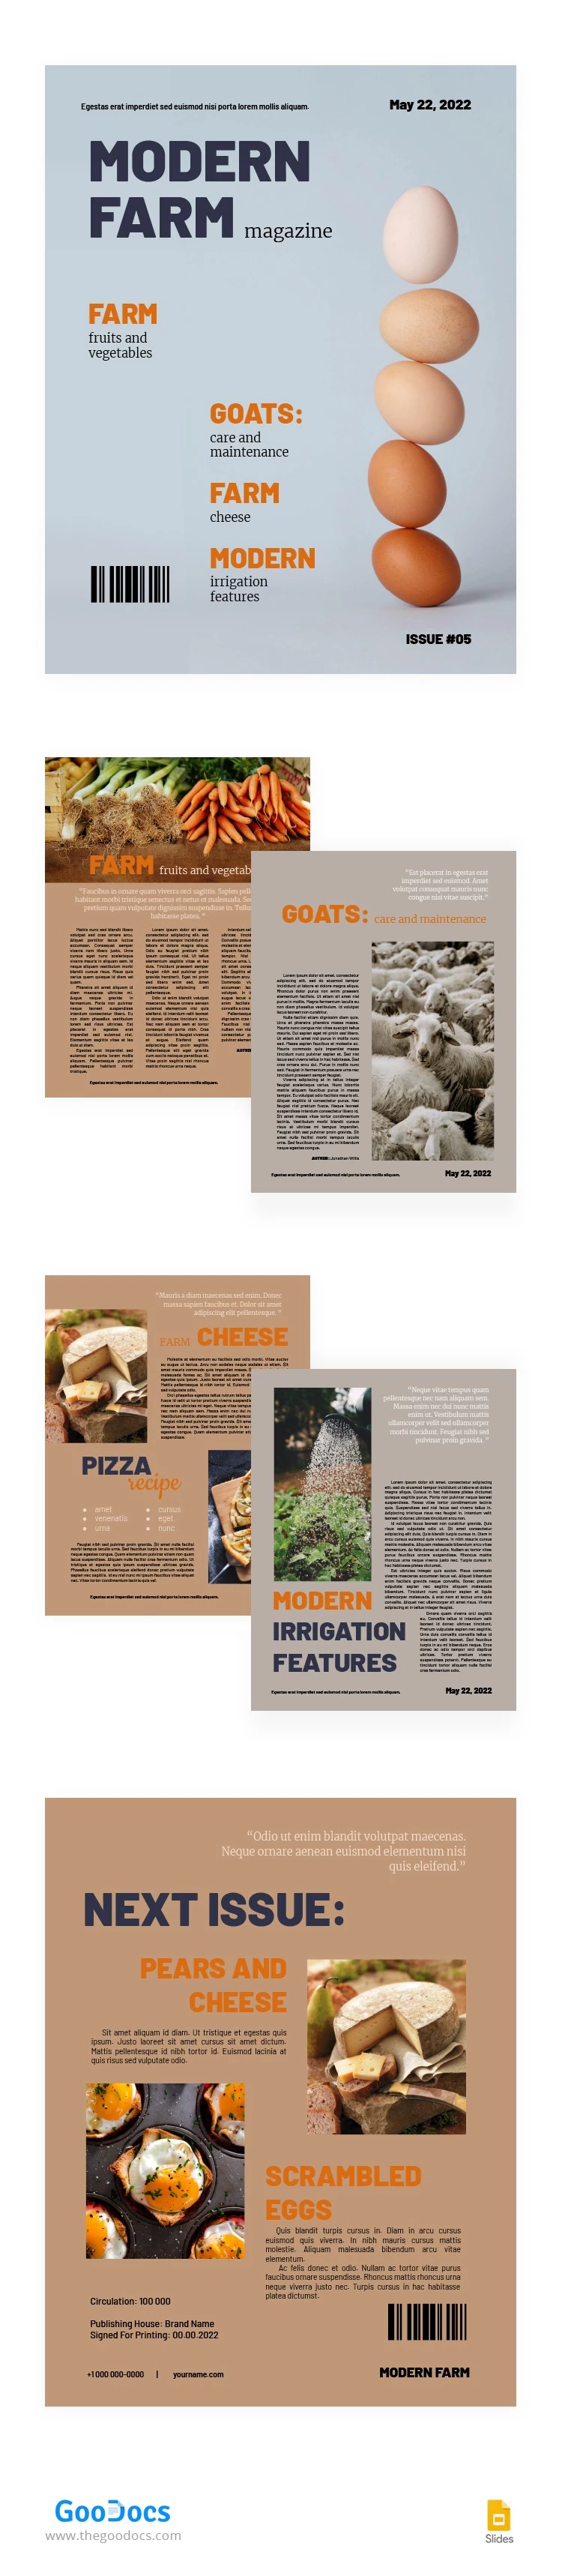 Magazine de ferme moderne - free Google Docs Template - 10063263